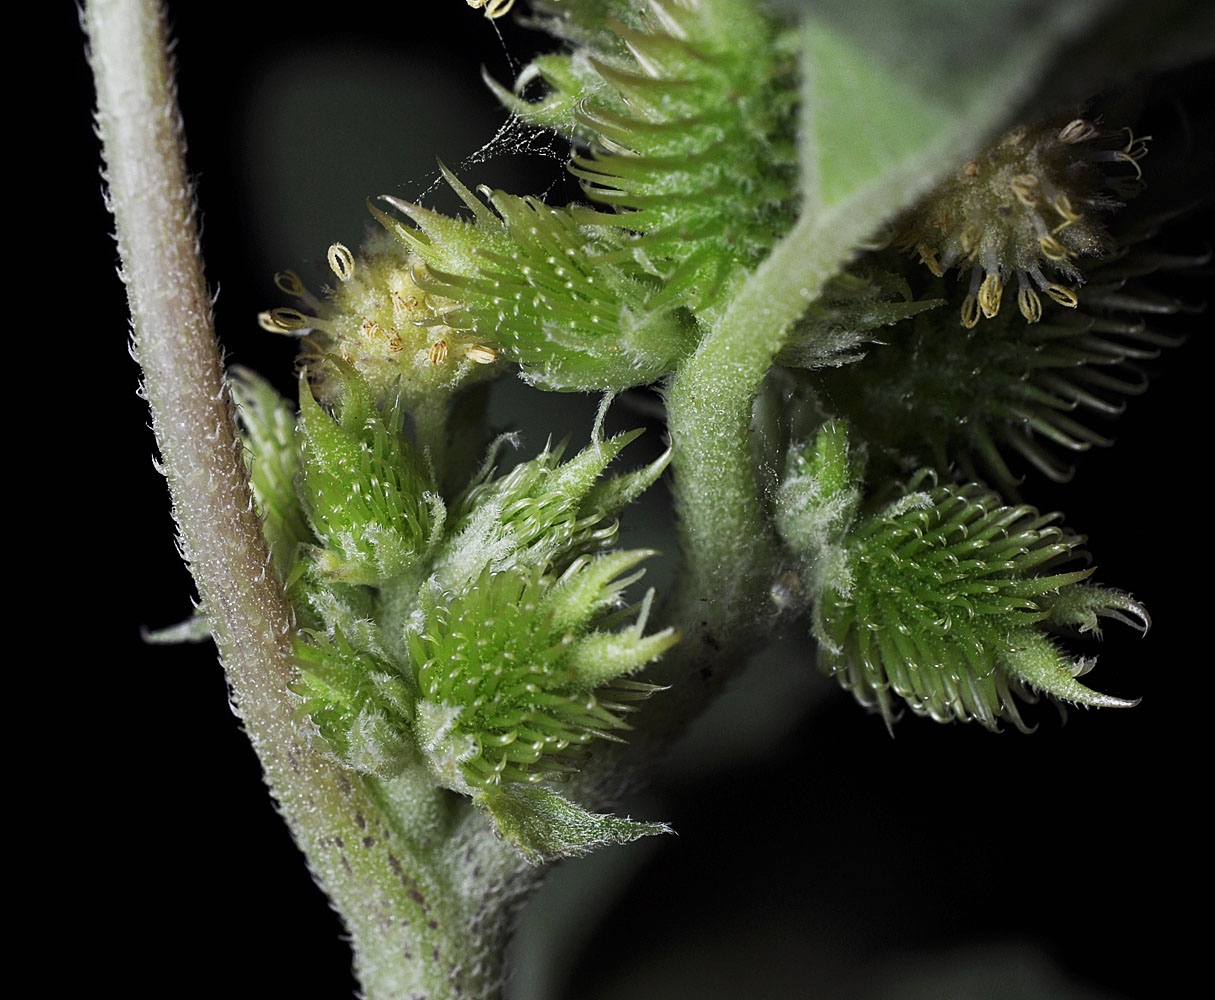 Flora of Eastern Washington Image: Xanthium strumarium